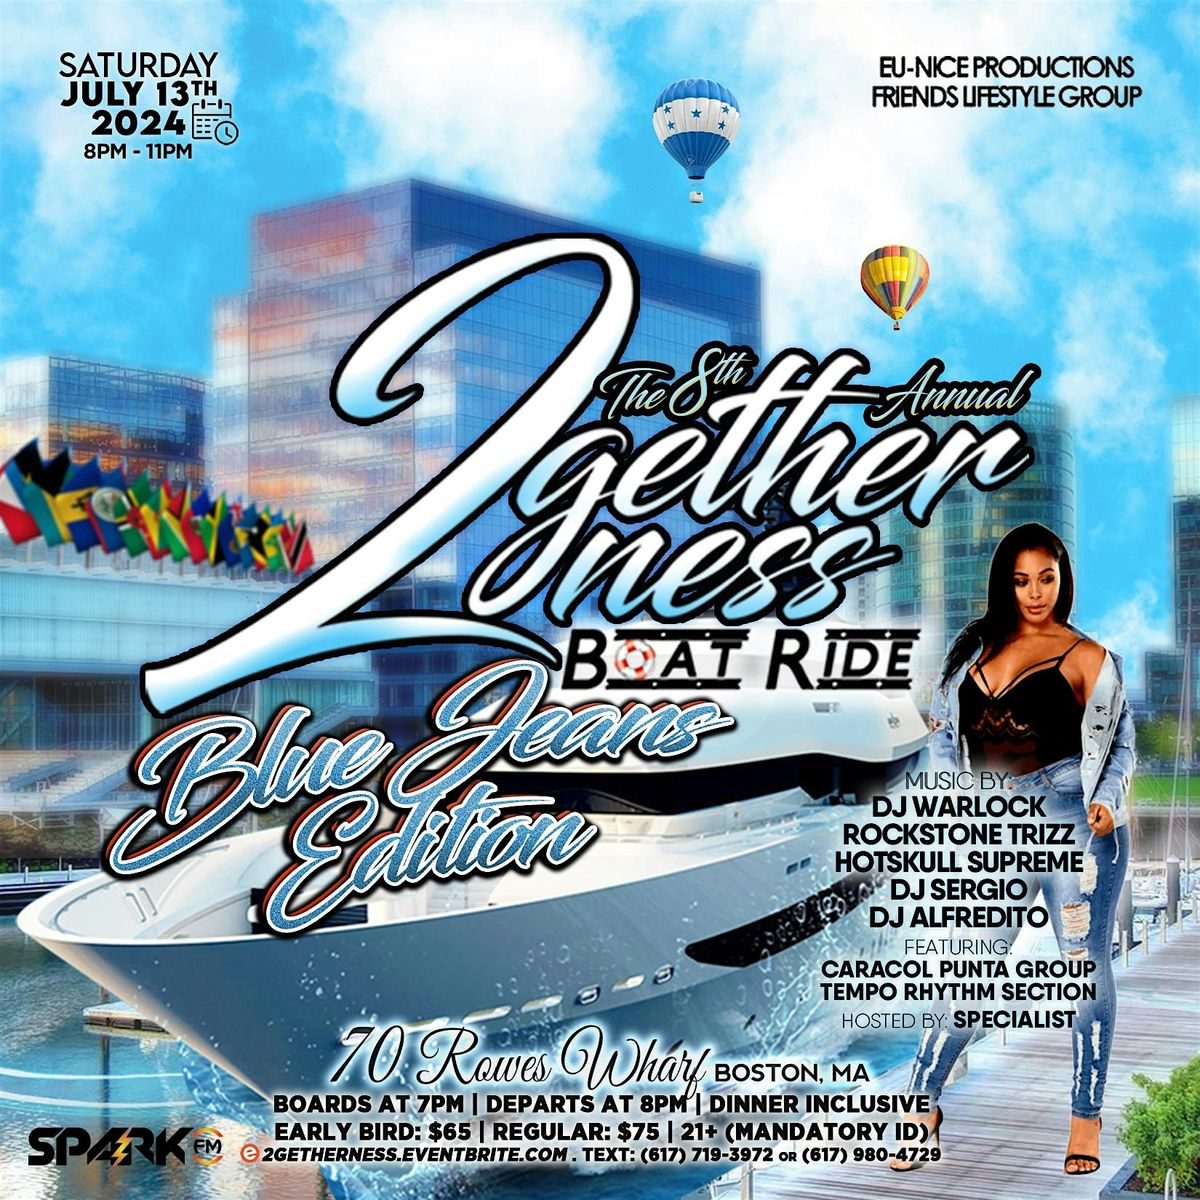 The 8th Annual 2getherness Boatride | Blue jean Edition